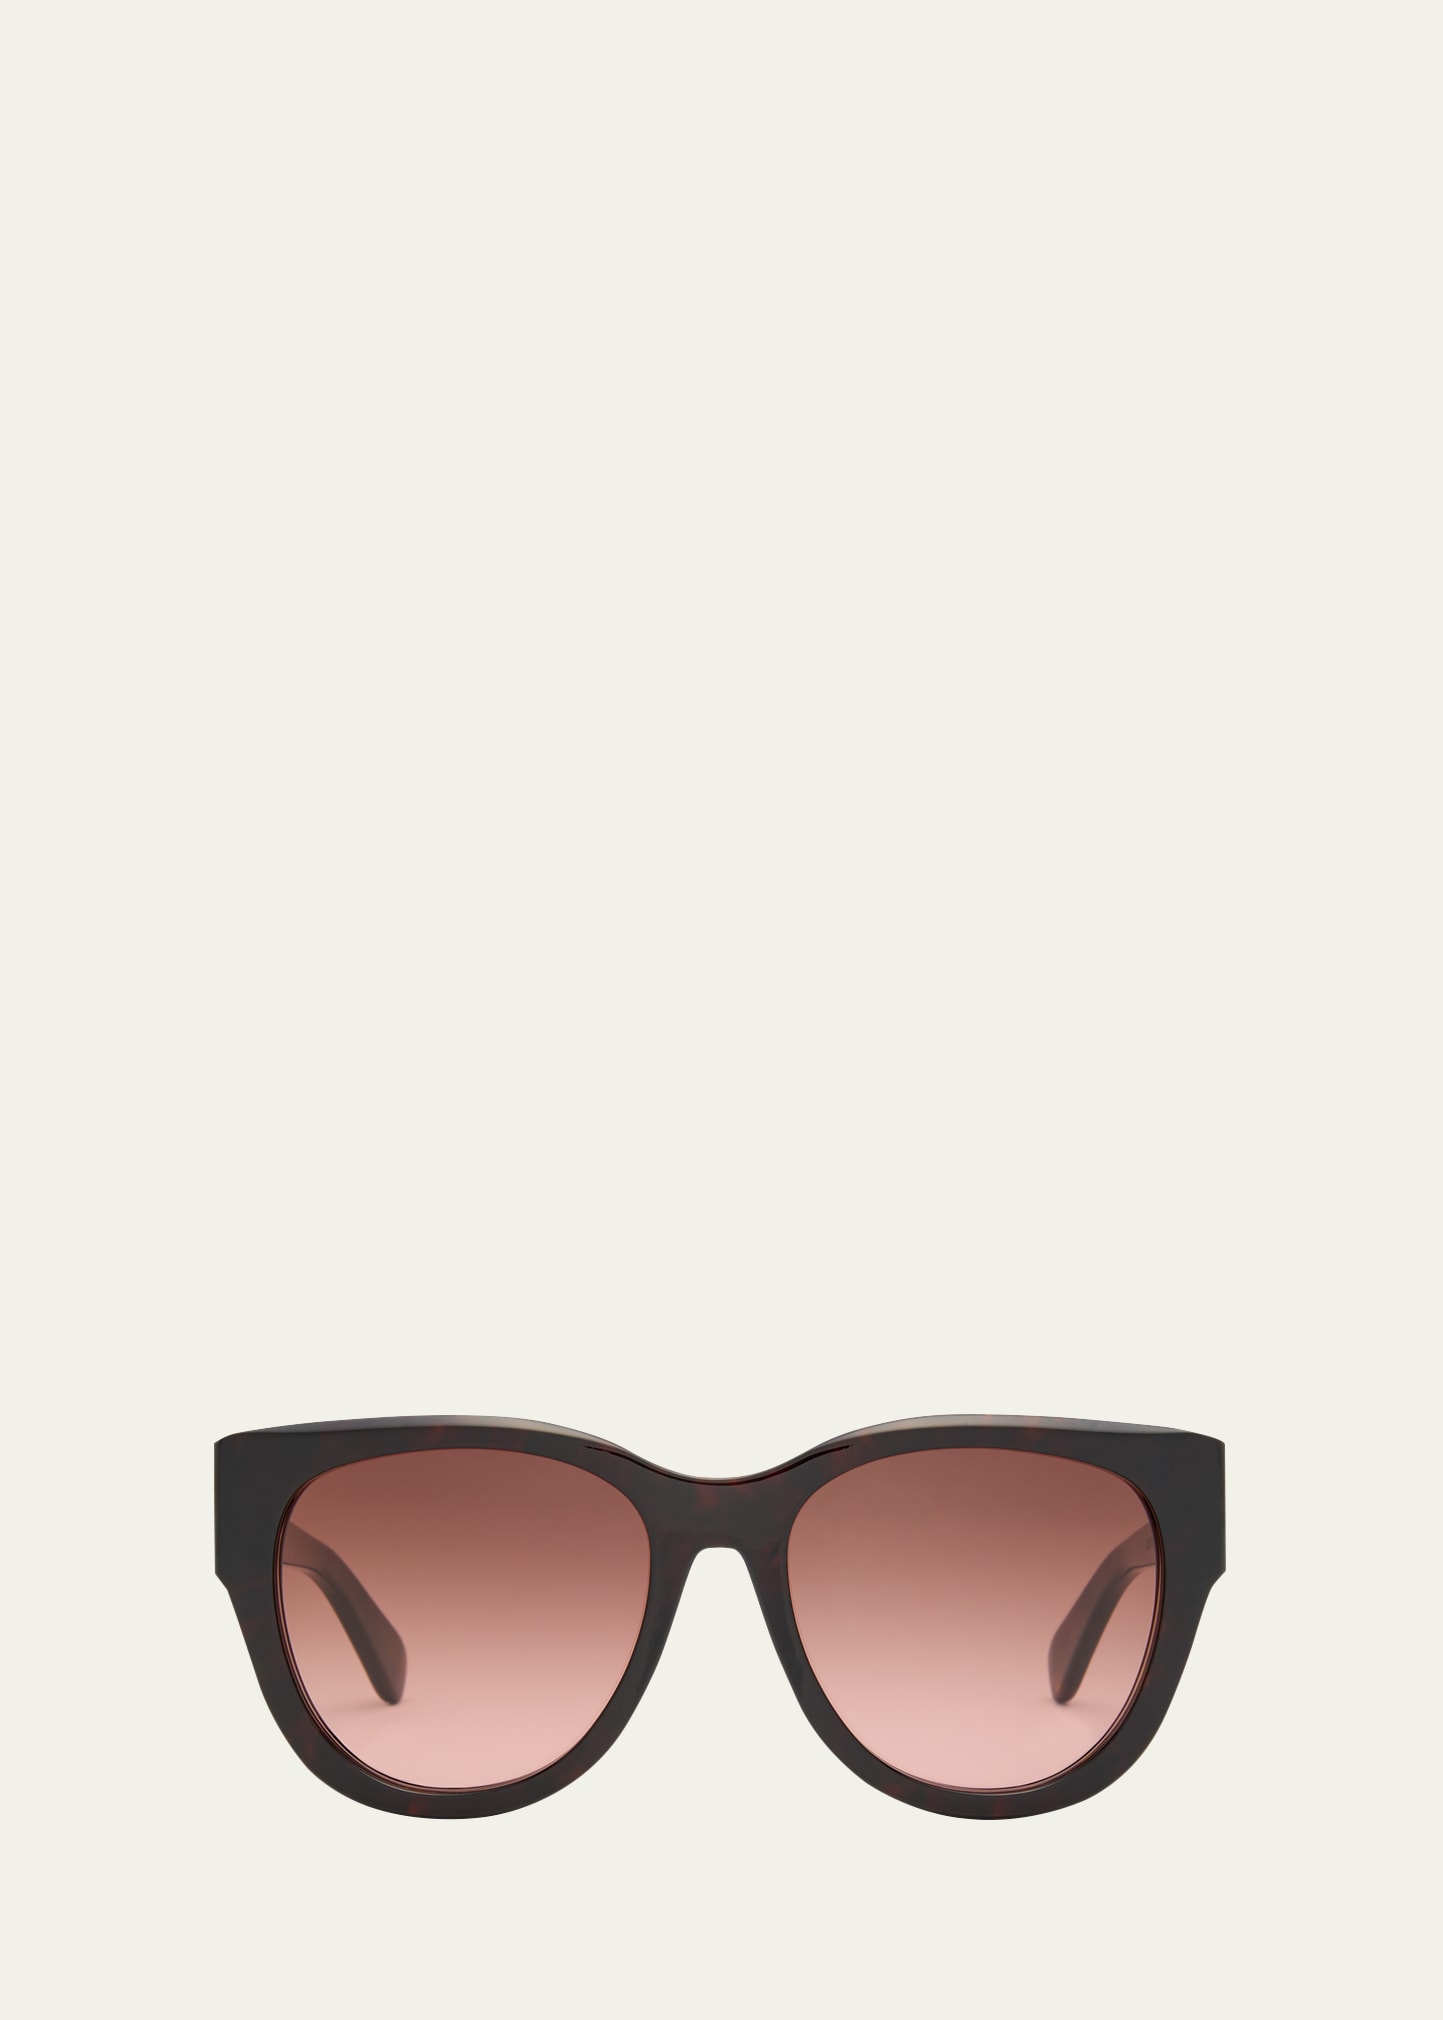 Chloé Acetate Cat-eye Sunglasses In Brown